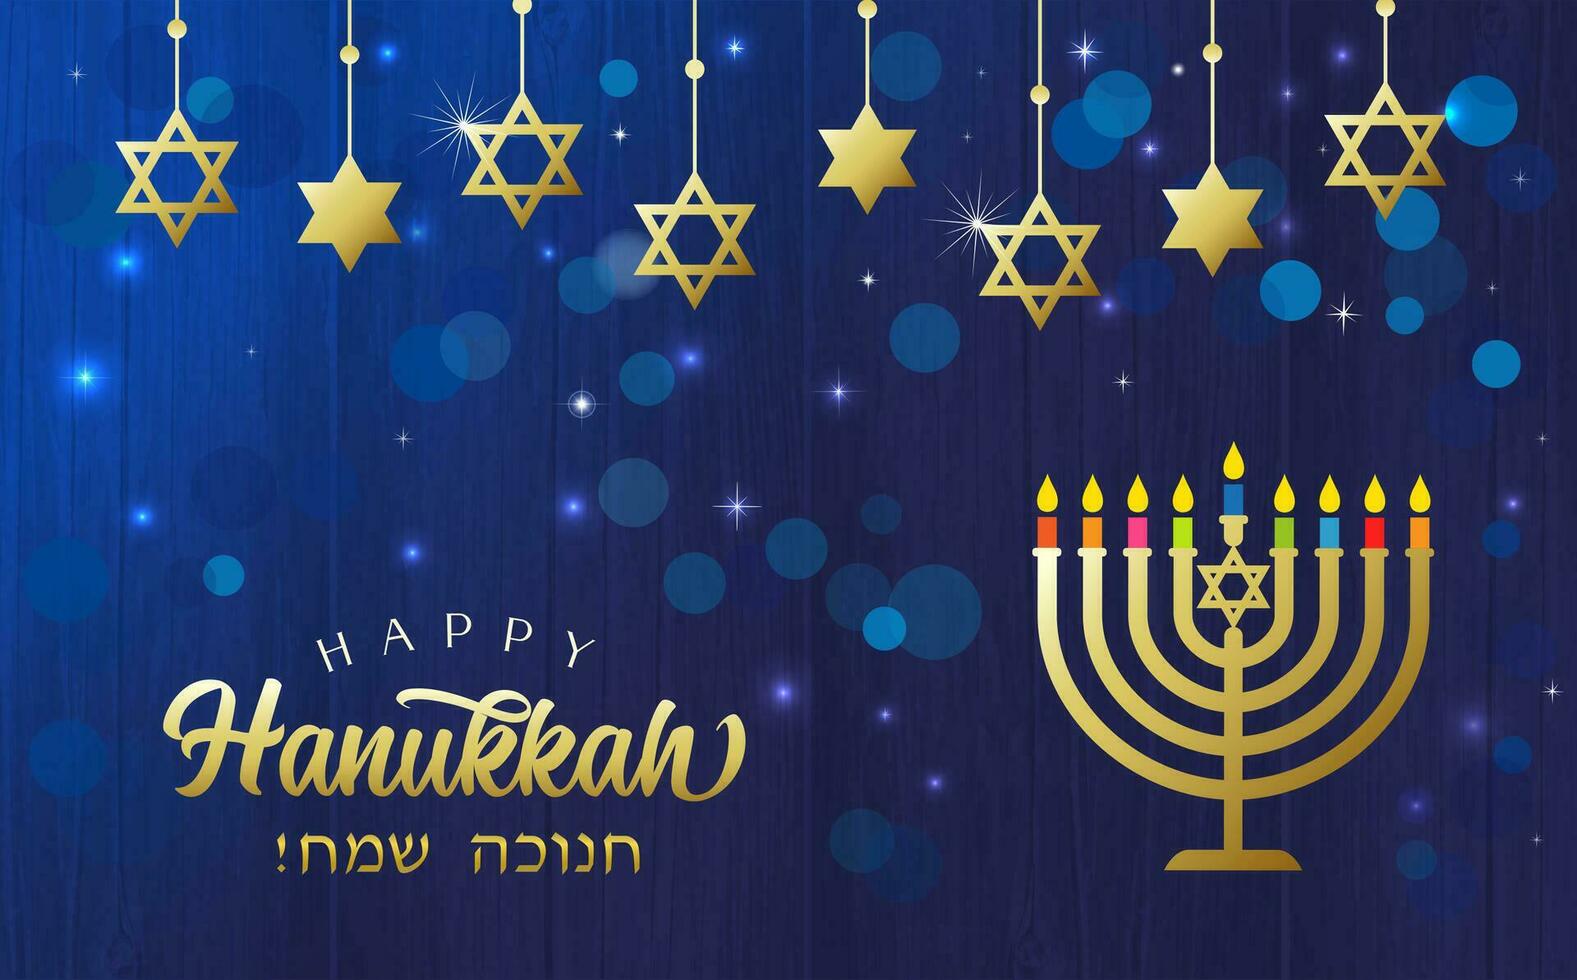 contento hanukkah con d'oro menorah e david stelle. ebraico testo - contento Hanukka, saluto carta concetto vettore